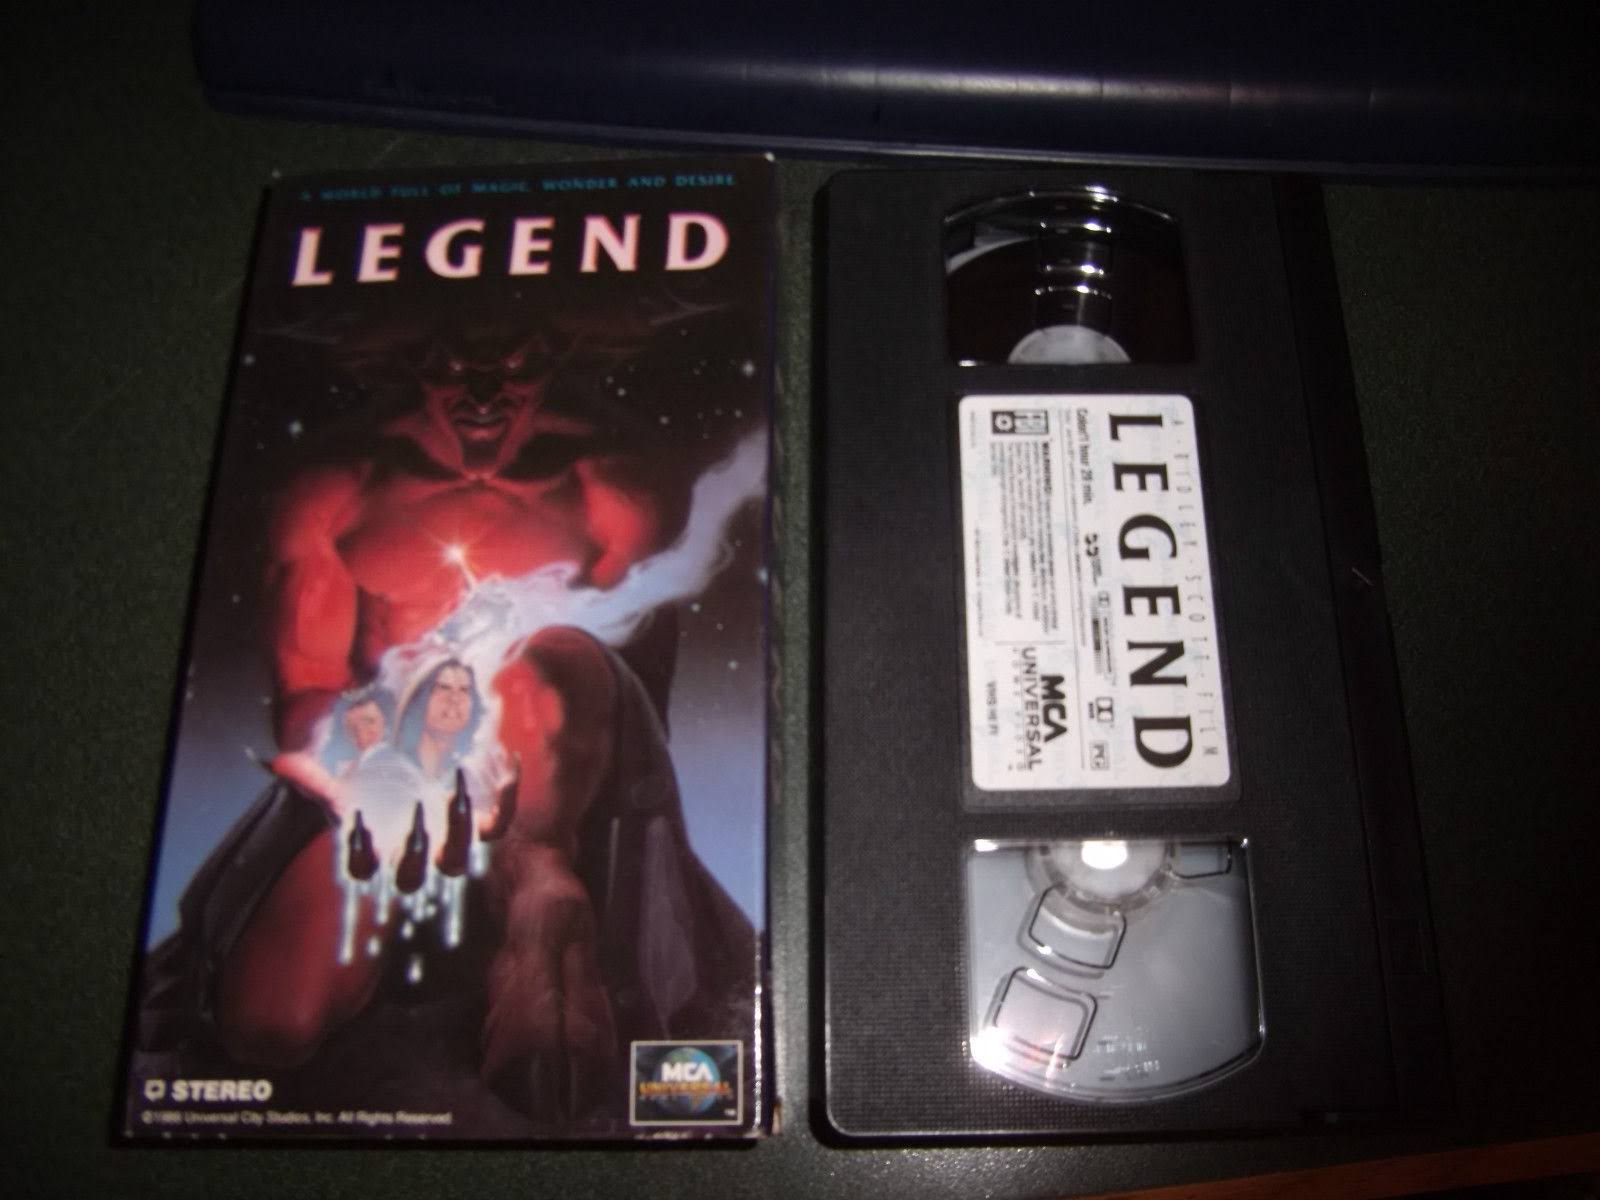 Legend (VHS, 1991)